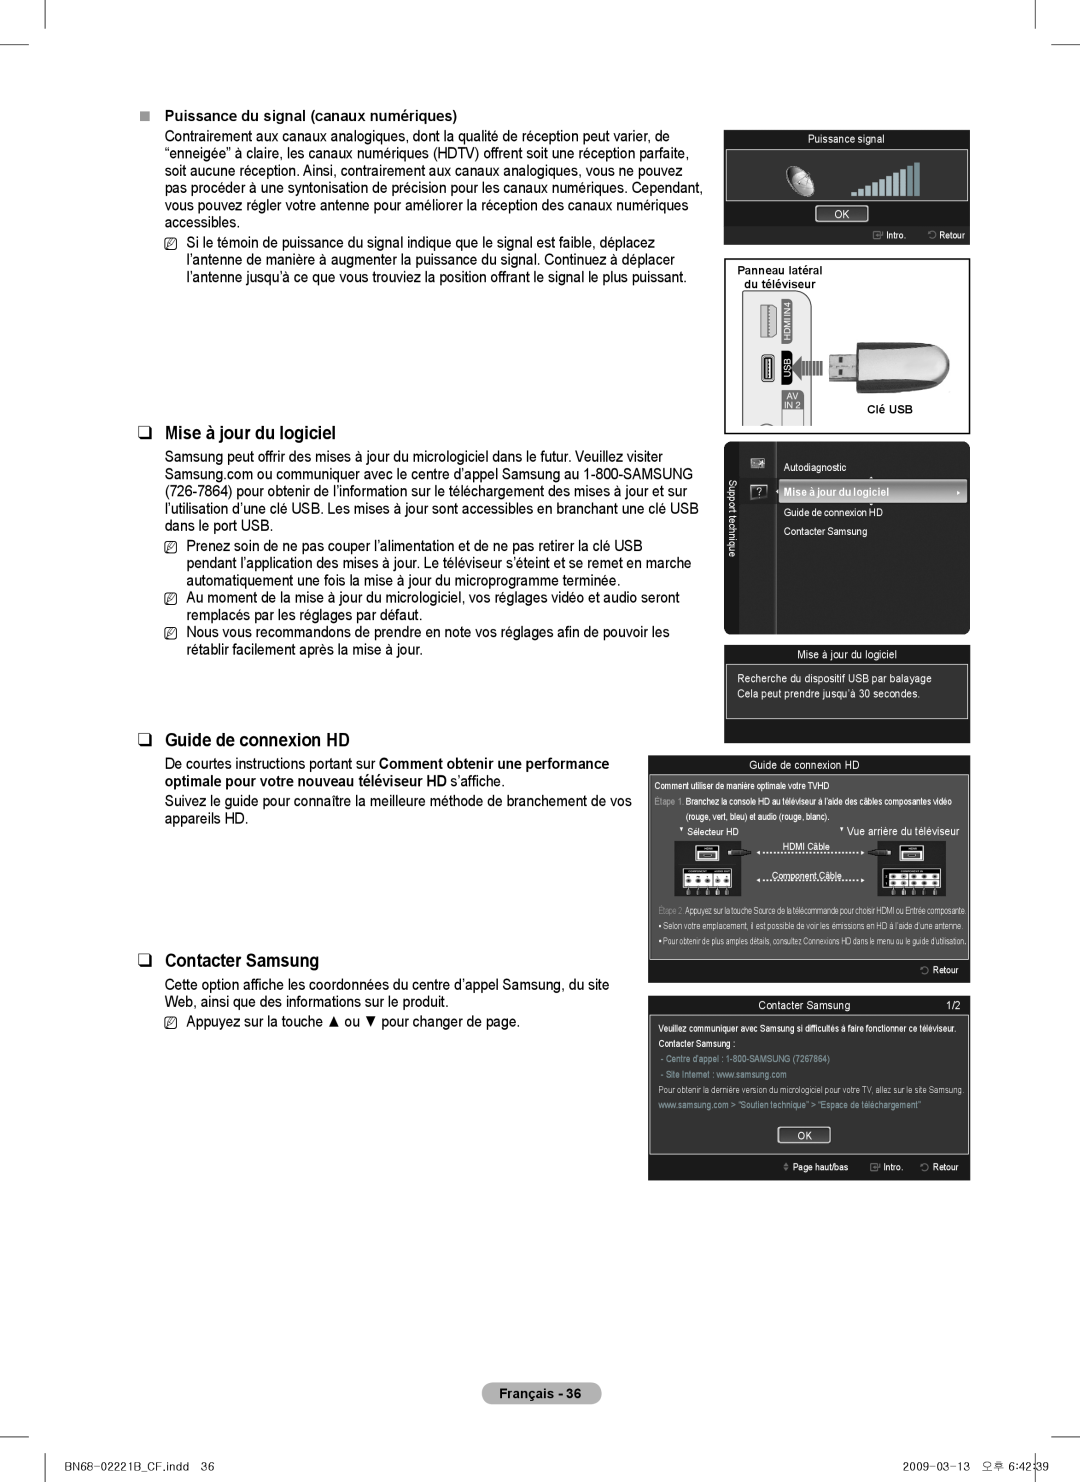 Samsung BN68-02221B-00, PN50B550TF, PN6B590T5F, PNB590T5F Mise à jour du logiciel, Guide de connexion HD, Contacter Samsung 